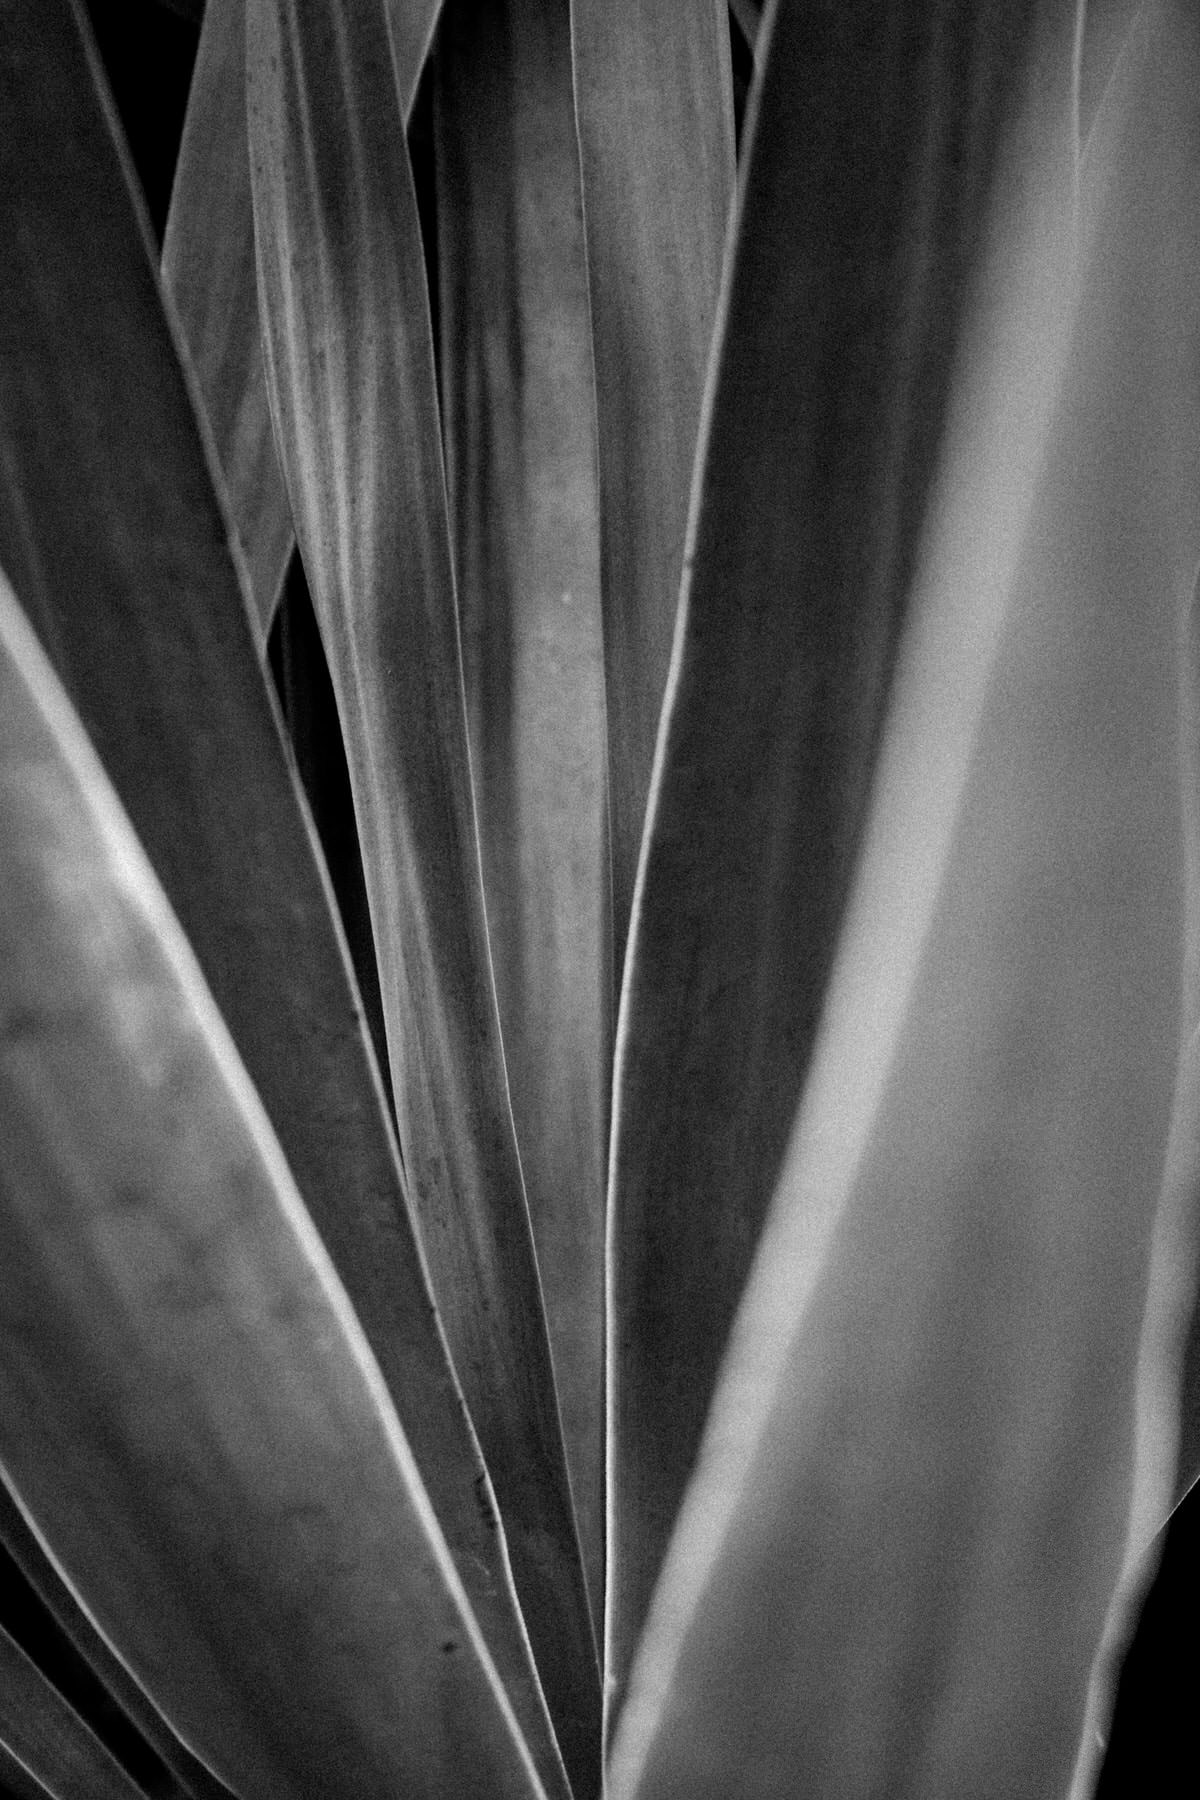 San-Diego-Zoo-San-Diego-California-black-and-white-fine-art-photography-by-Studio-L-photographer-Laura-Schneider-_2640